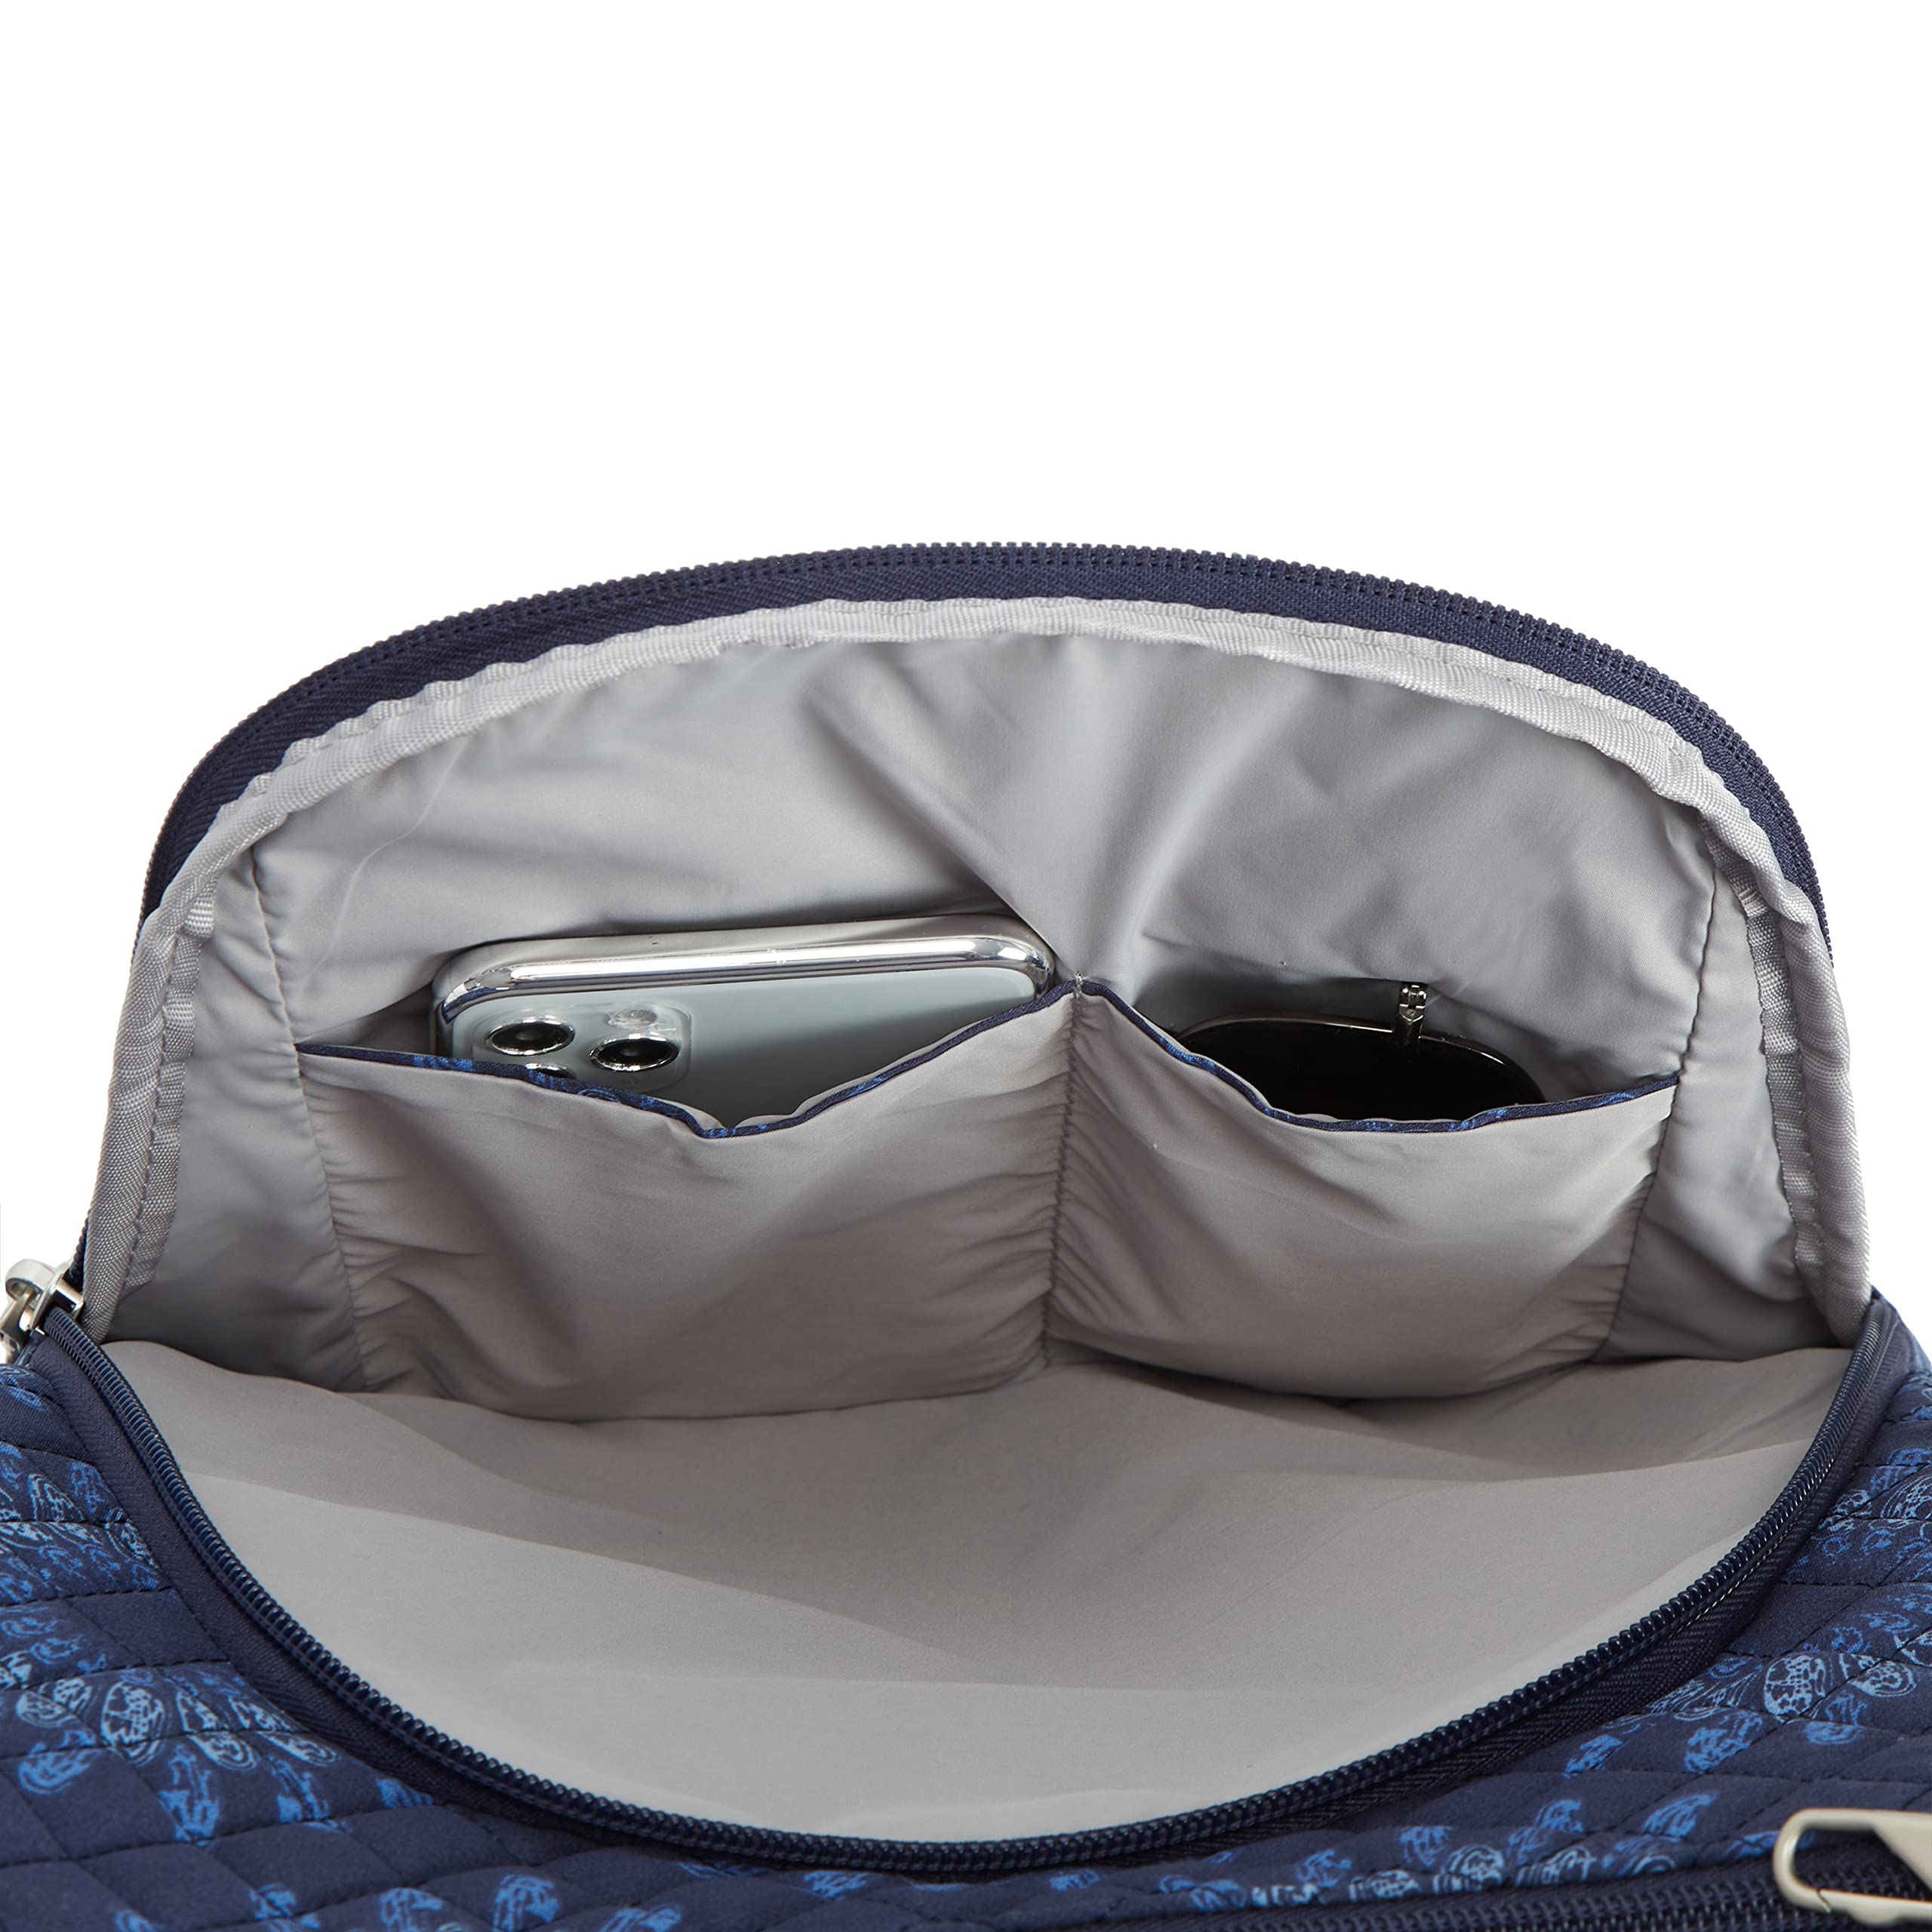 Travelon Anti-Theft Classic Cross-Body Bucket Bag, Geo Sunflower, One Size